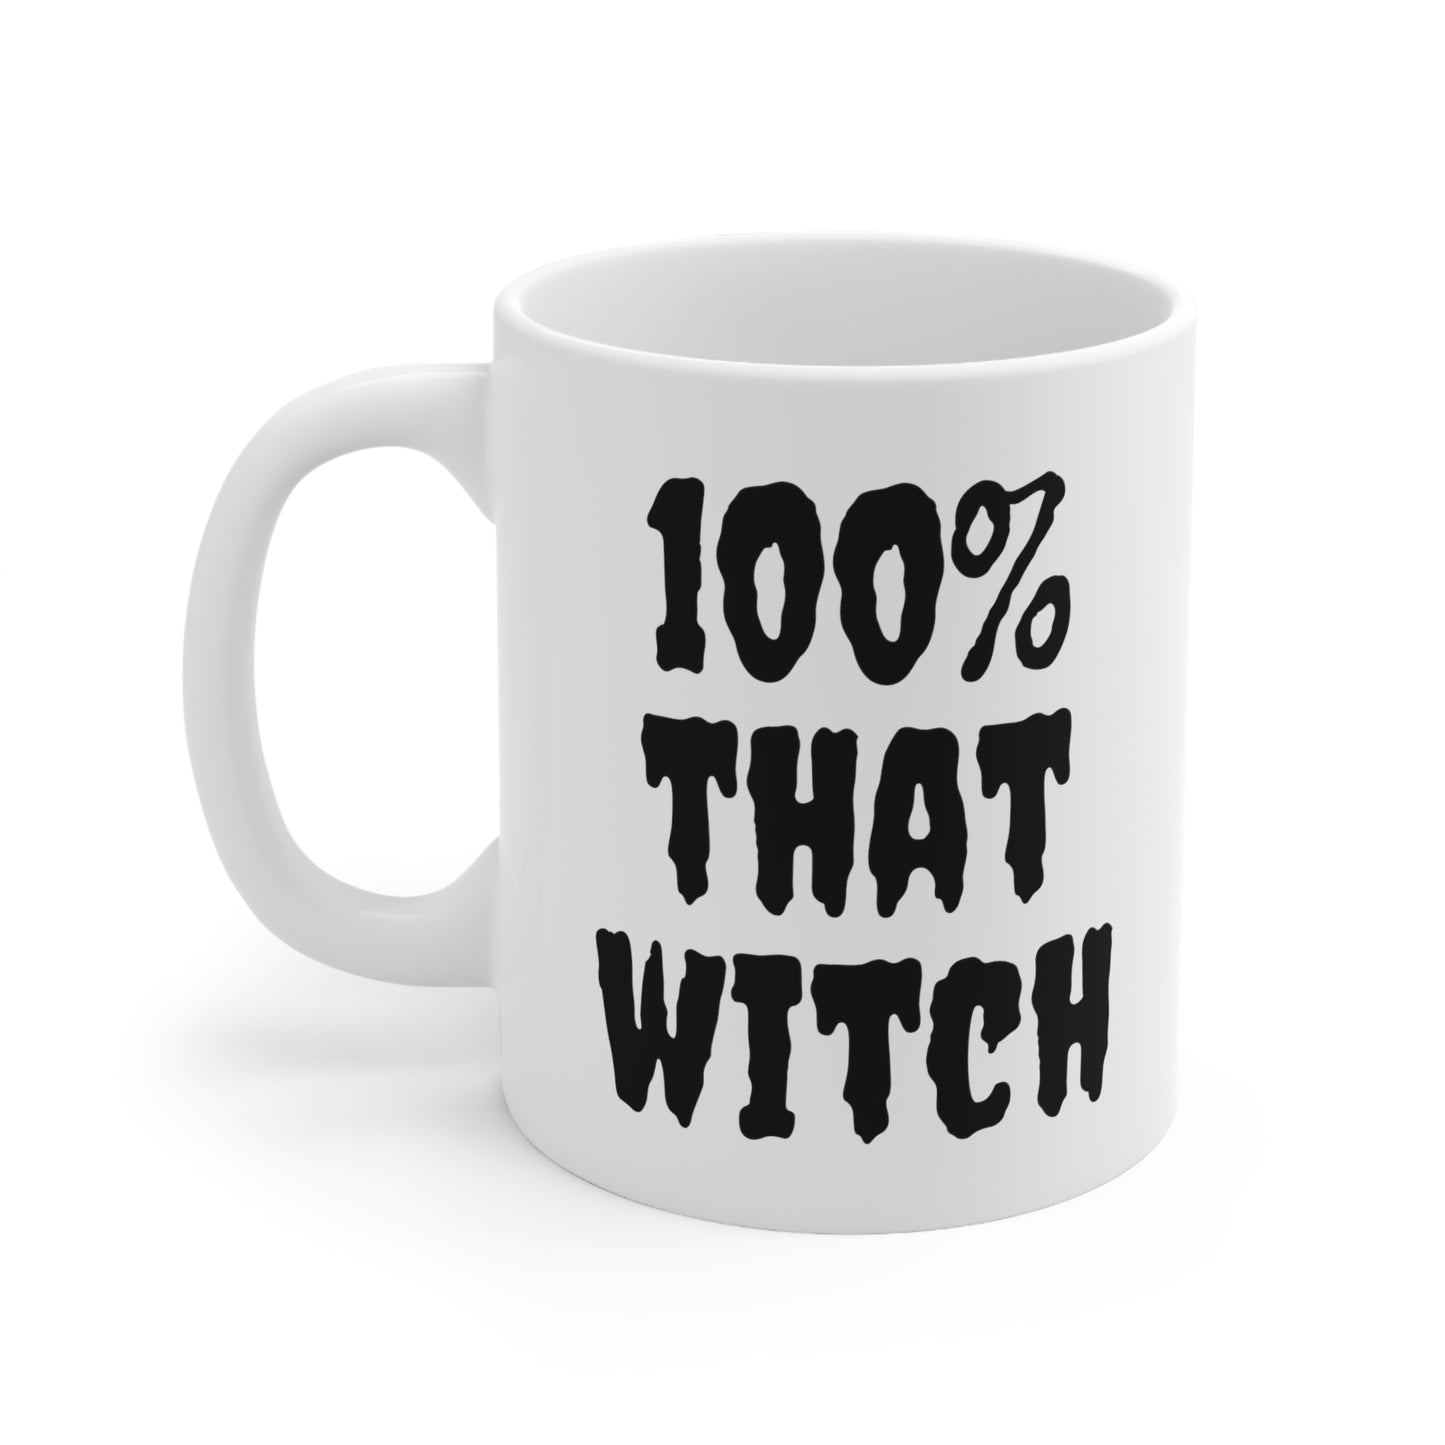 100% That Witch Halloween Mug